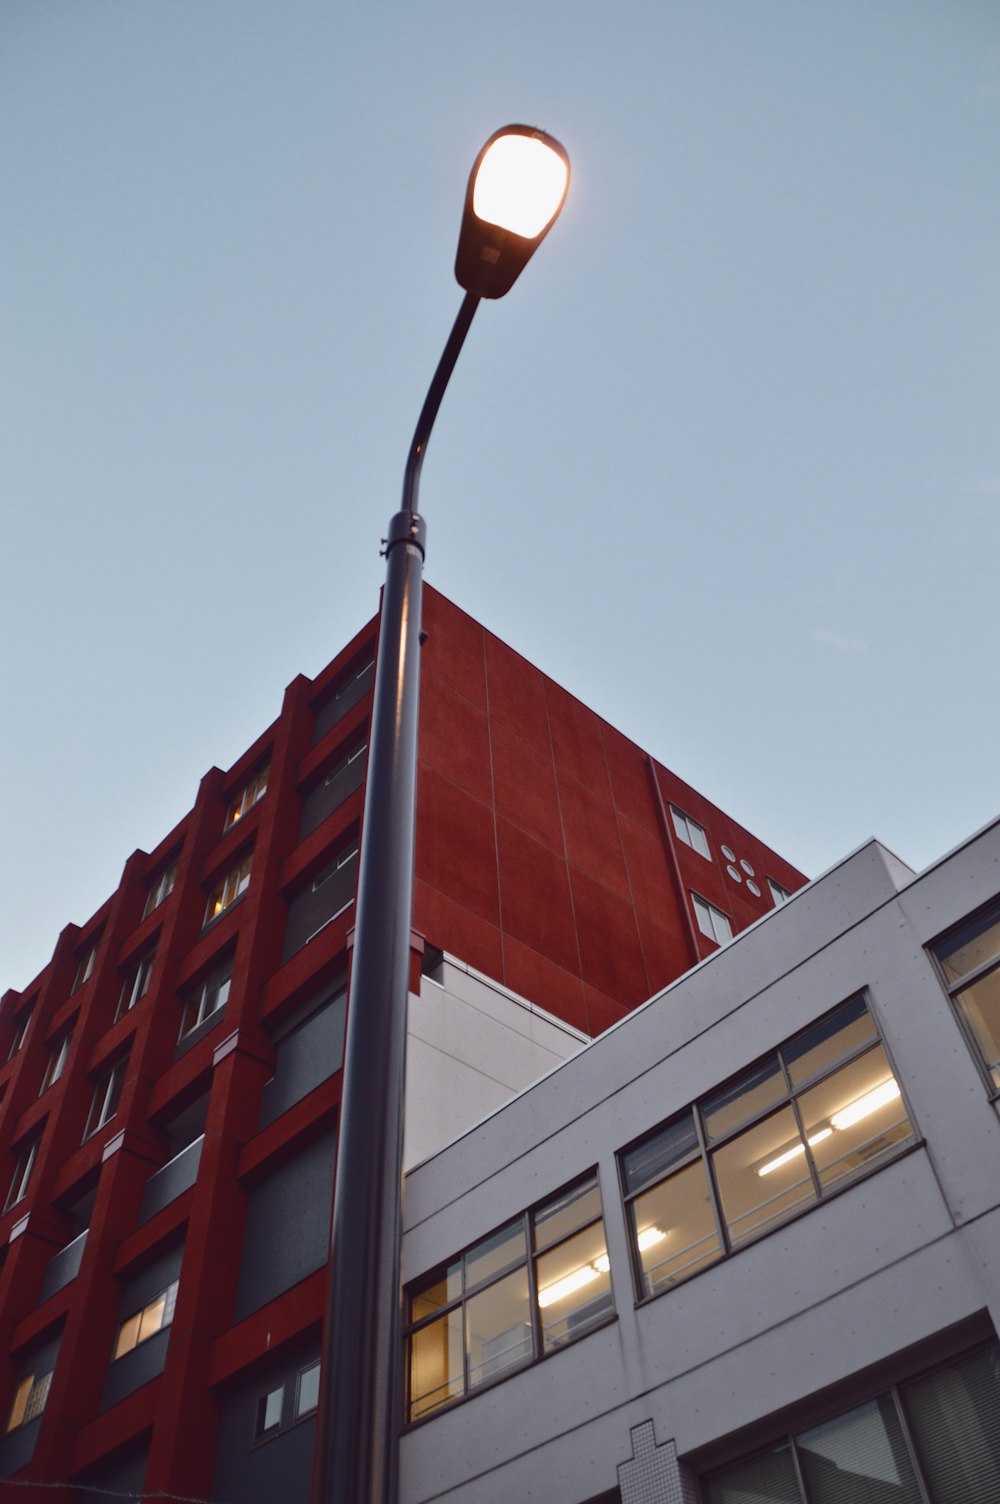 a street light next to a tall red building